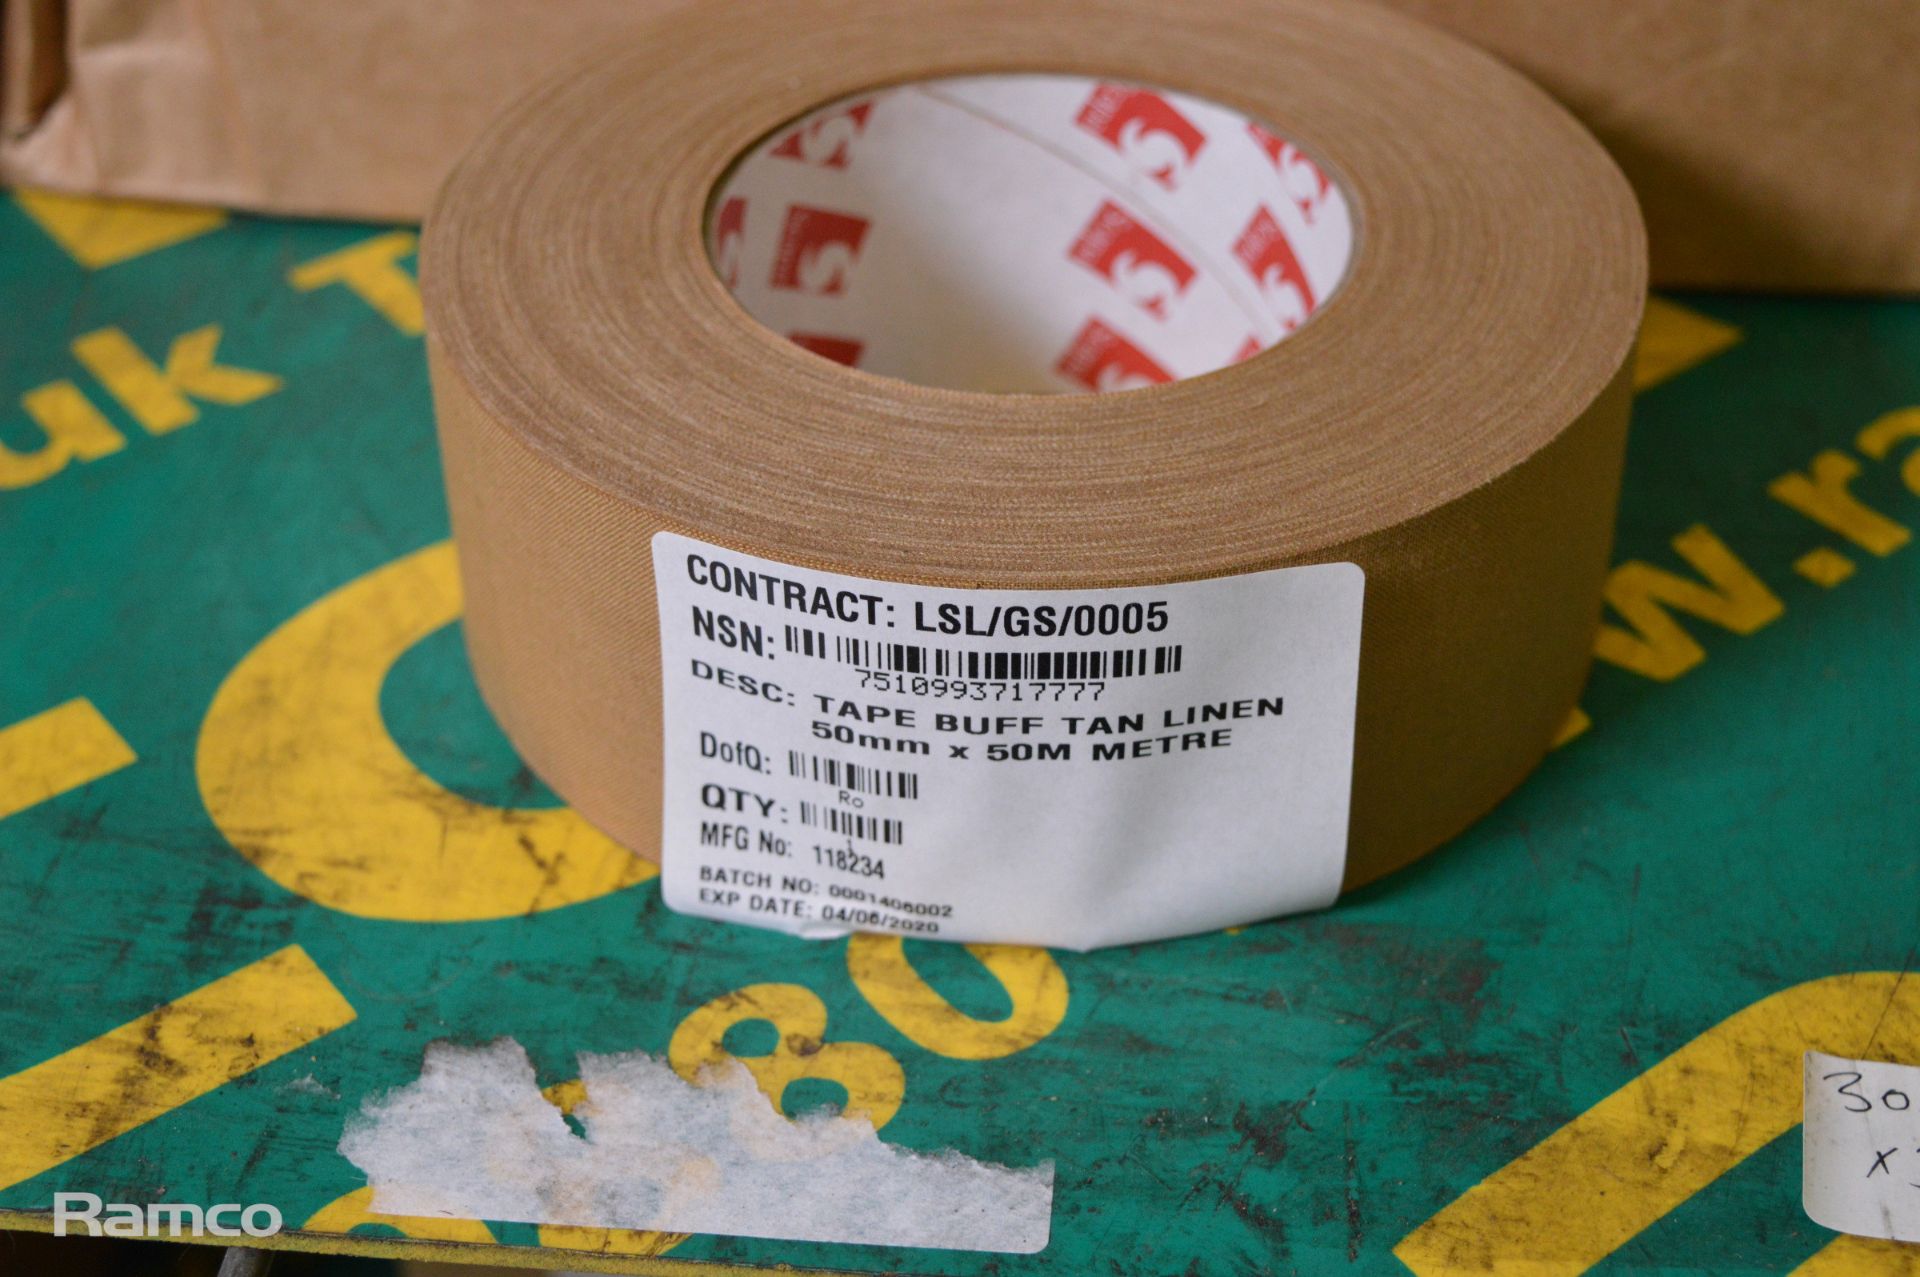 Scapa 3302 cloth adhesive tape 50mm x 50M - 16 per box - 1 box - Image 2 of 3